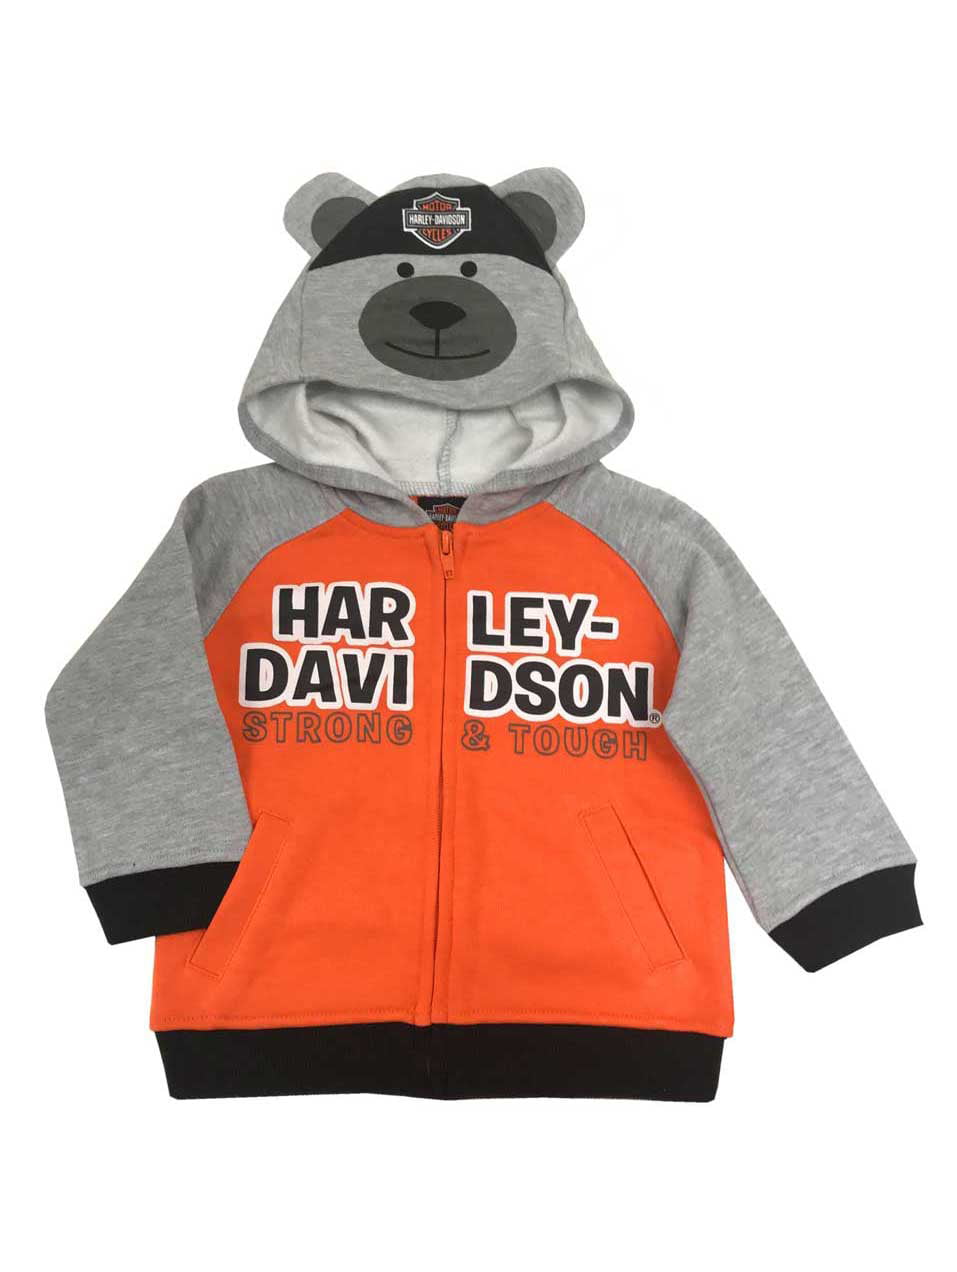 Harley Davidson Baby Boys Bear Hood Fleece Infant Hoodie Gray Orange 24m Harley Davidson Walmart Com